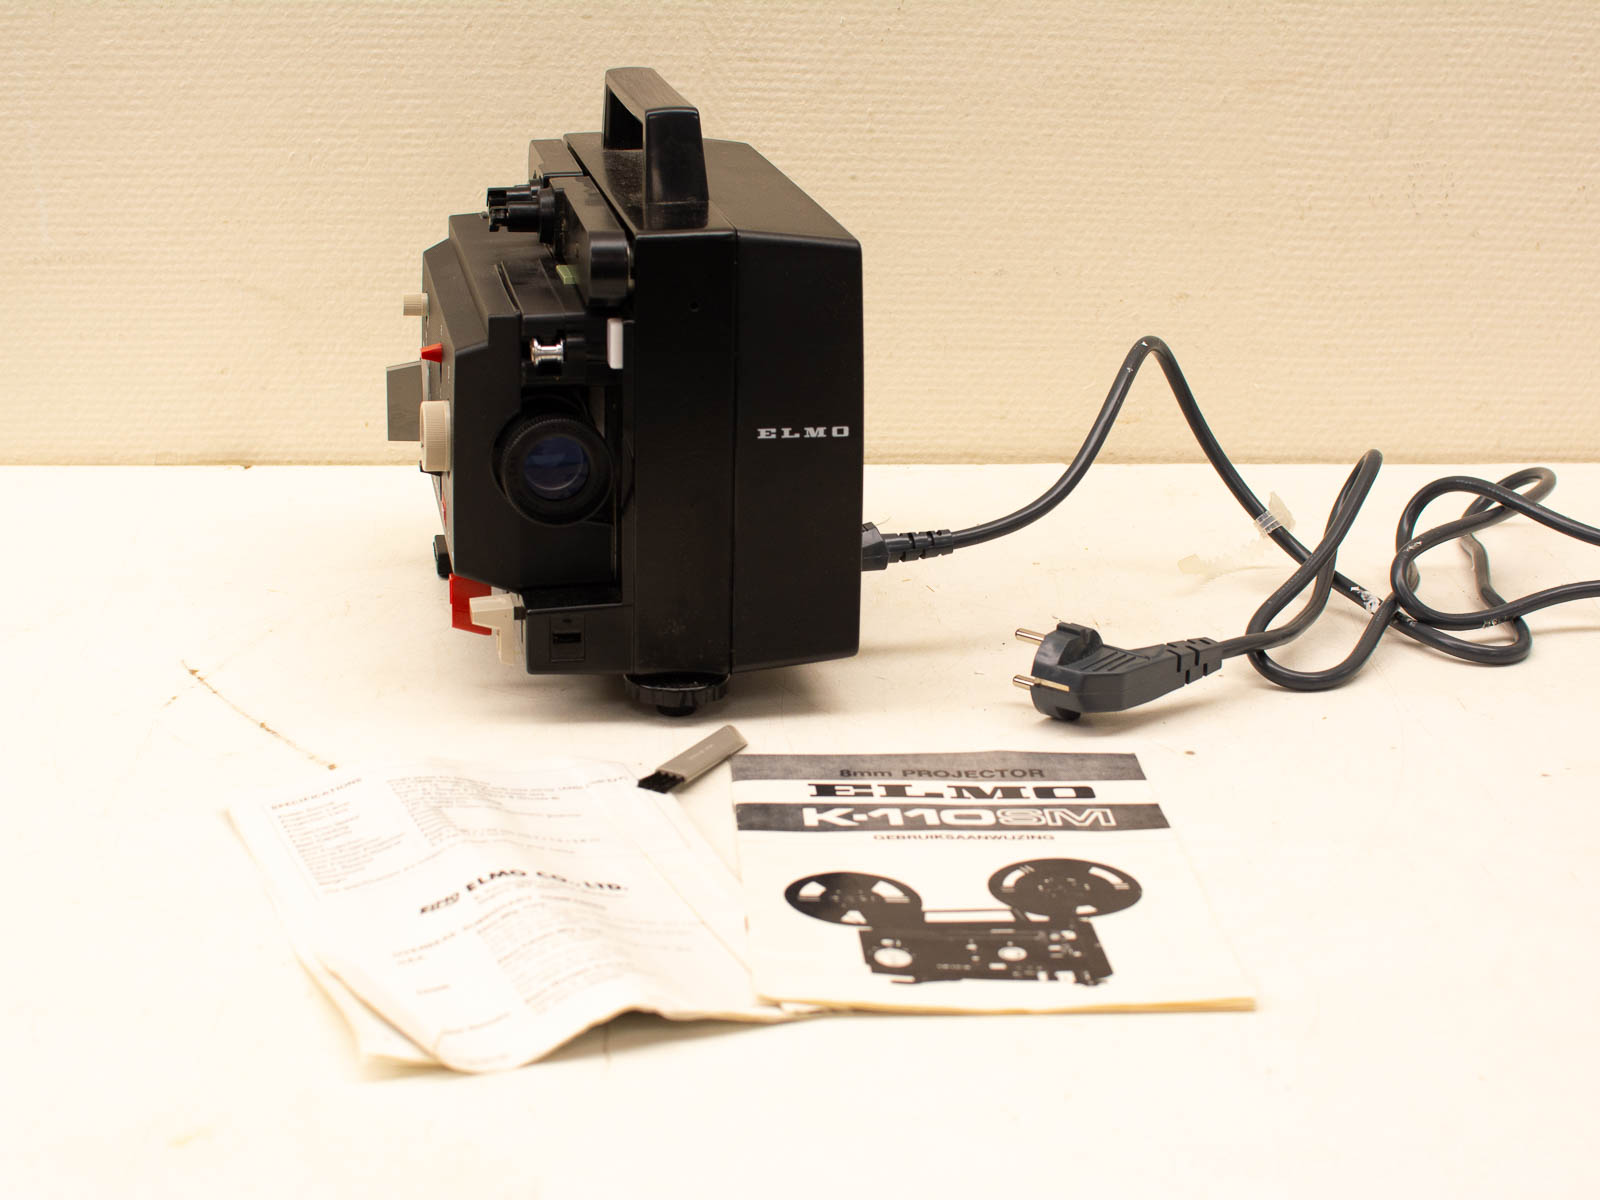 Elmo K.110 sm 8mm projector 30847